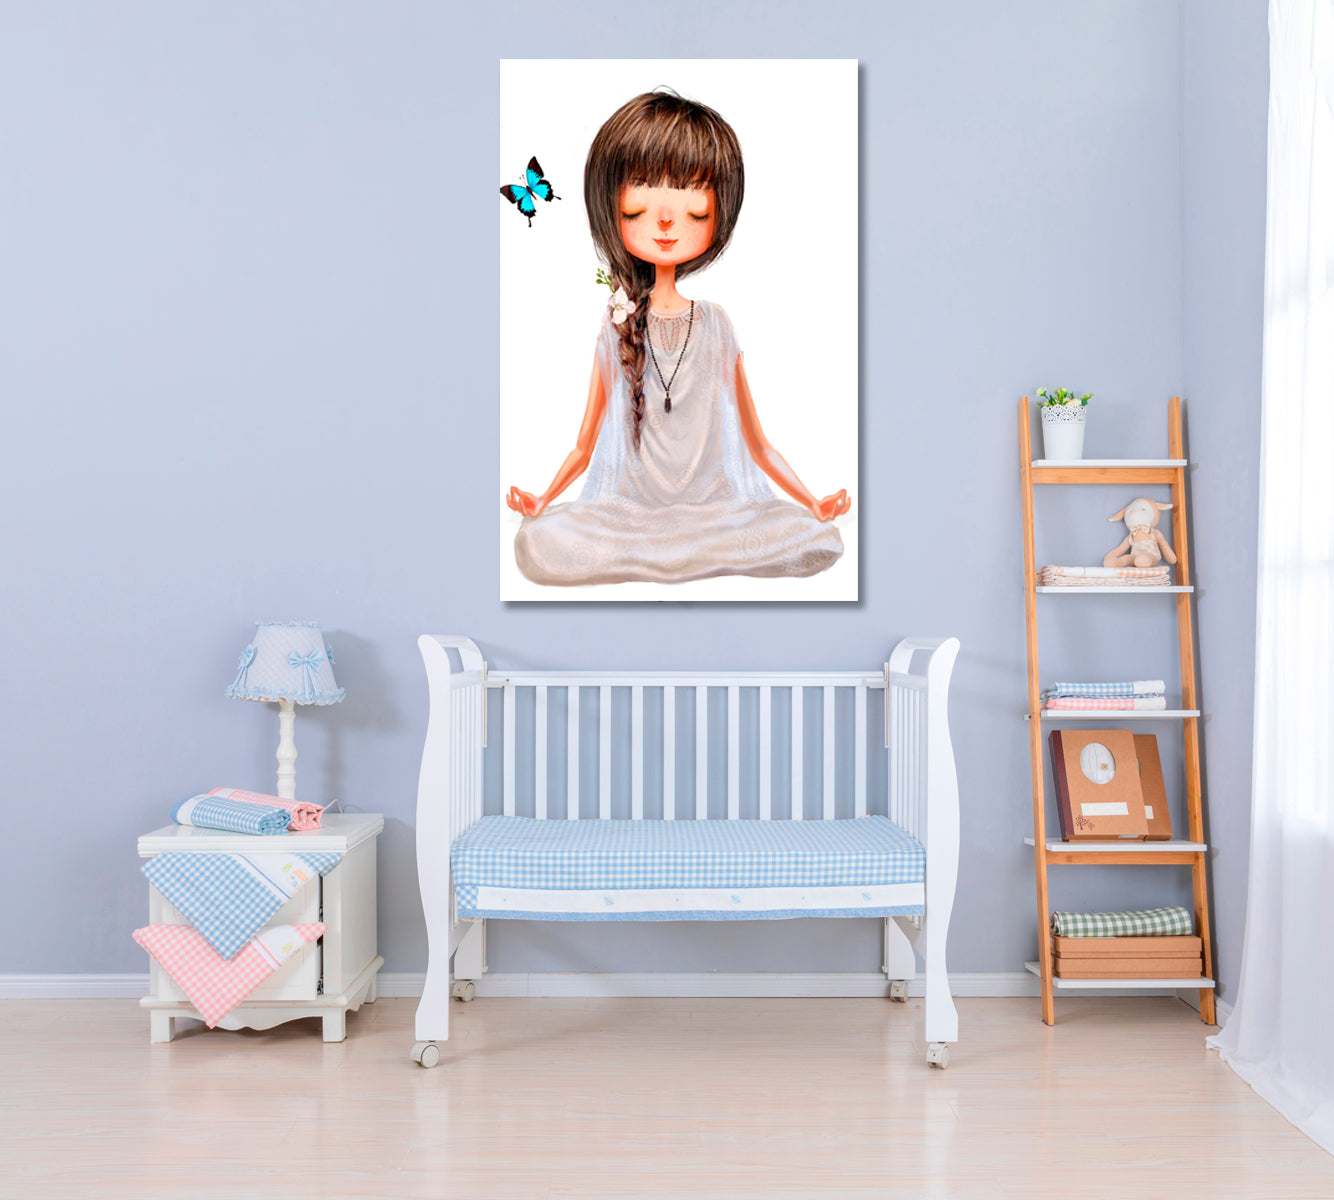 Girl in Yoga Lotus Pose Canvas Print ArtLexy   